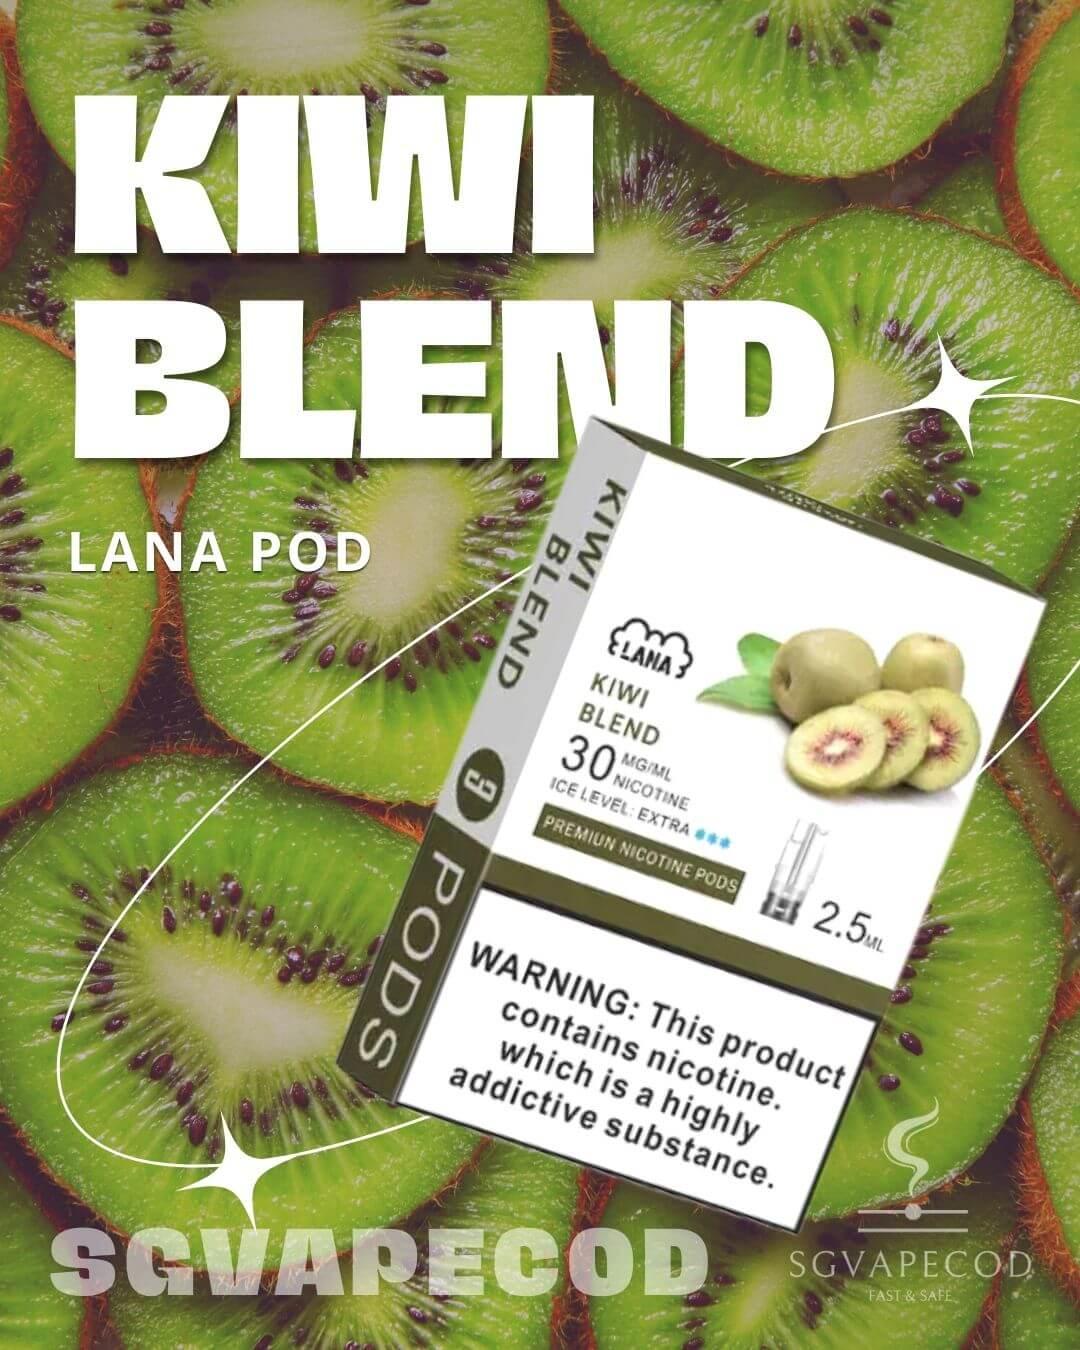 Lana Pod-Kiwi Blend